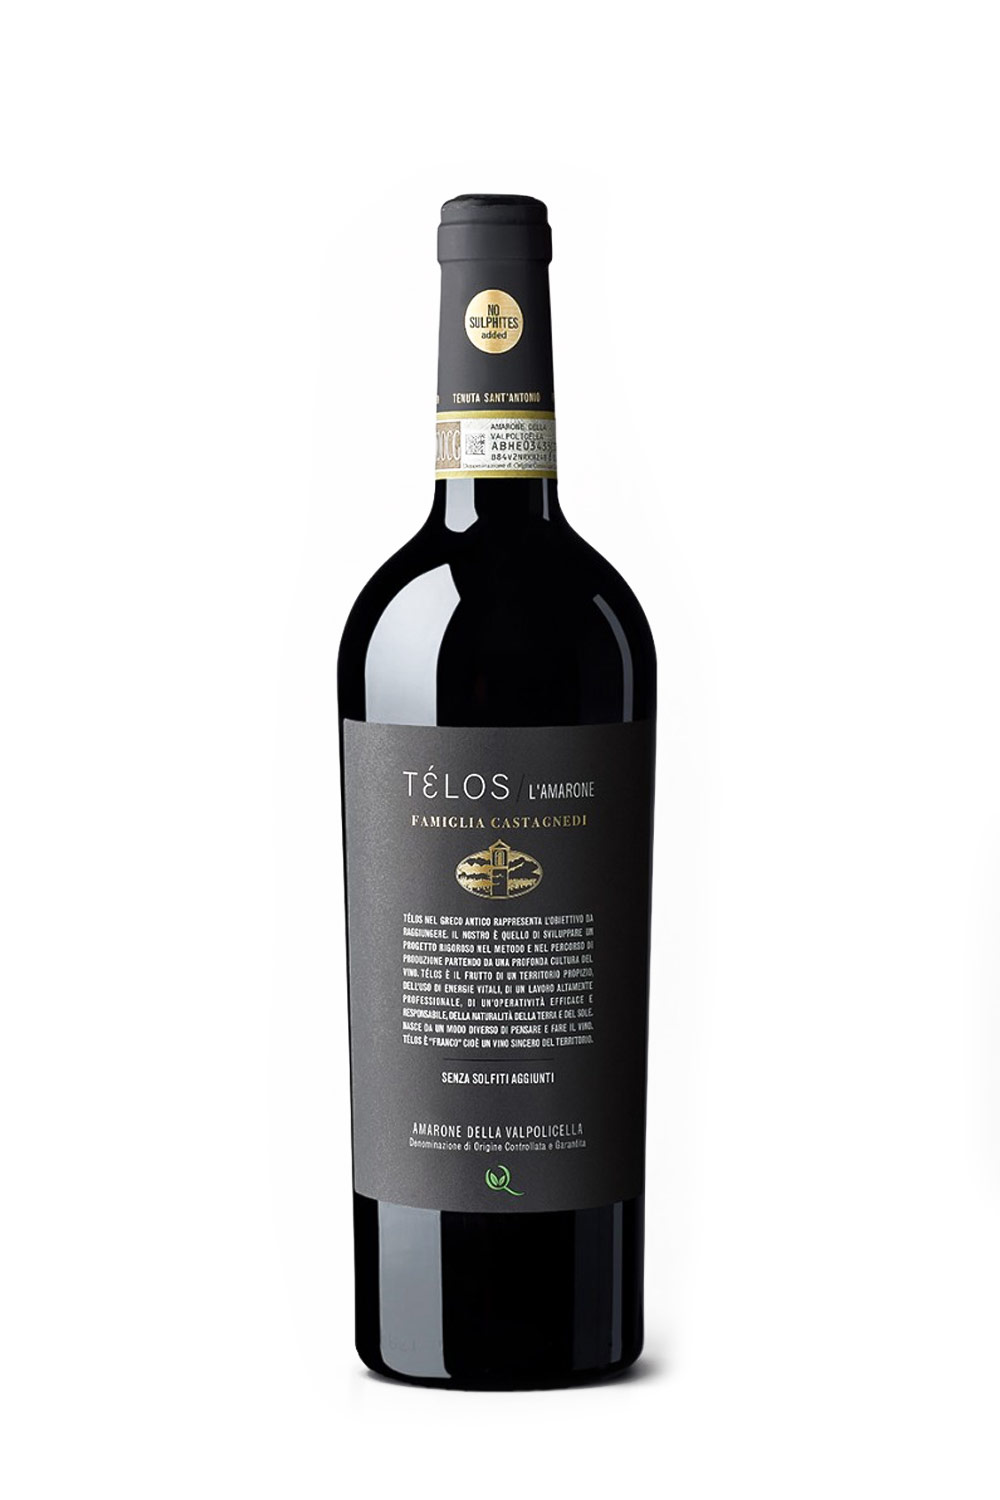 Antonio bei - Online kaufen Weine della Sant Italien L´Amarone 2016 | DOCG Vini aus Tenuta Valpolicella Senti Télos